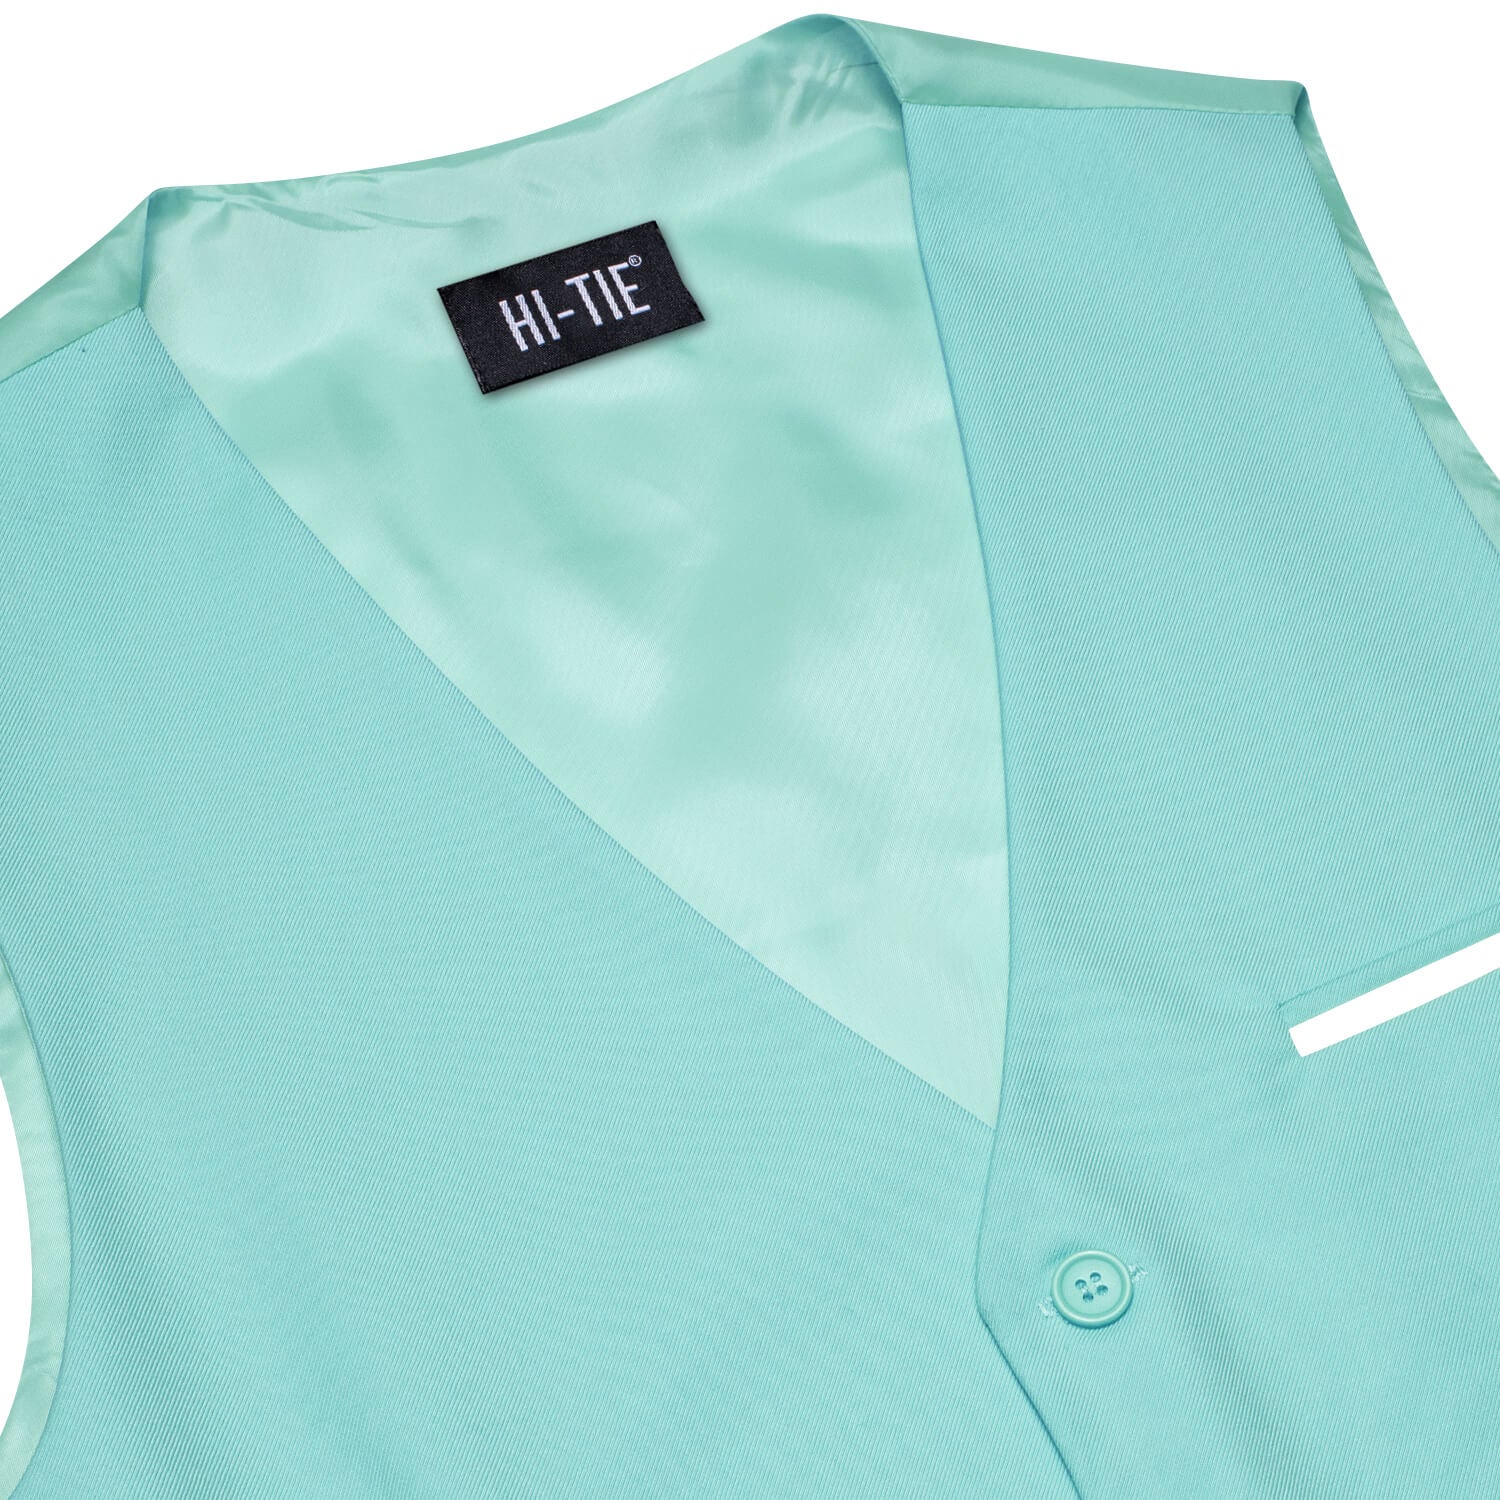 Hi-Tie Vest for Men Pale Teal Solid Silk Vest Business Dress Suit